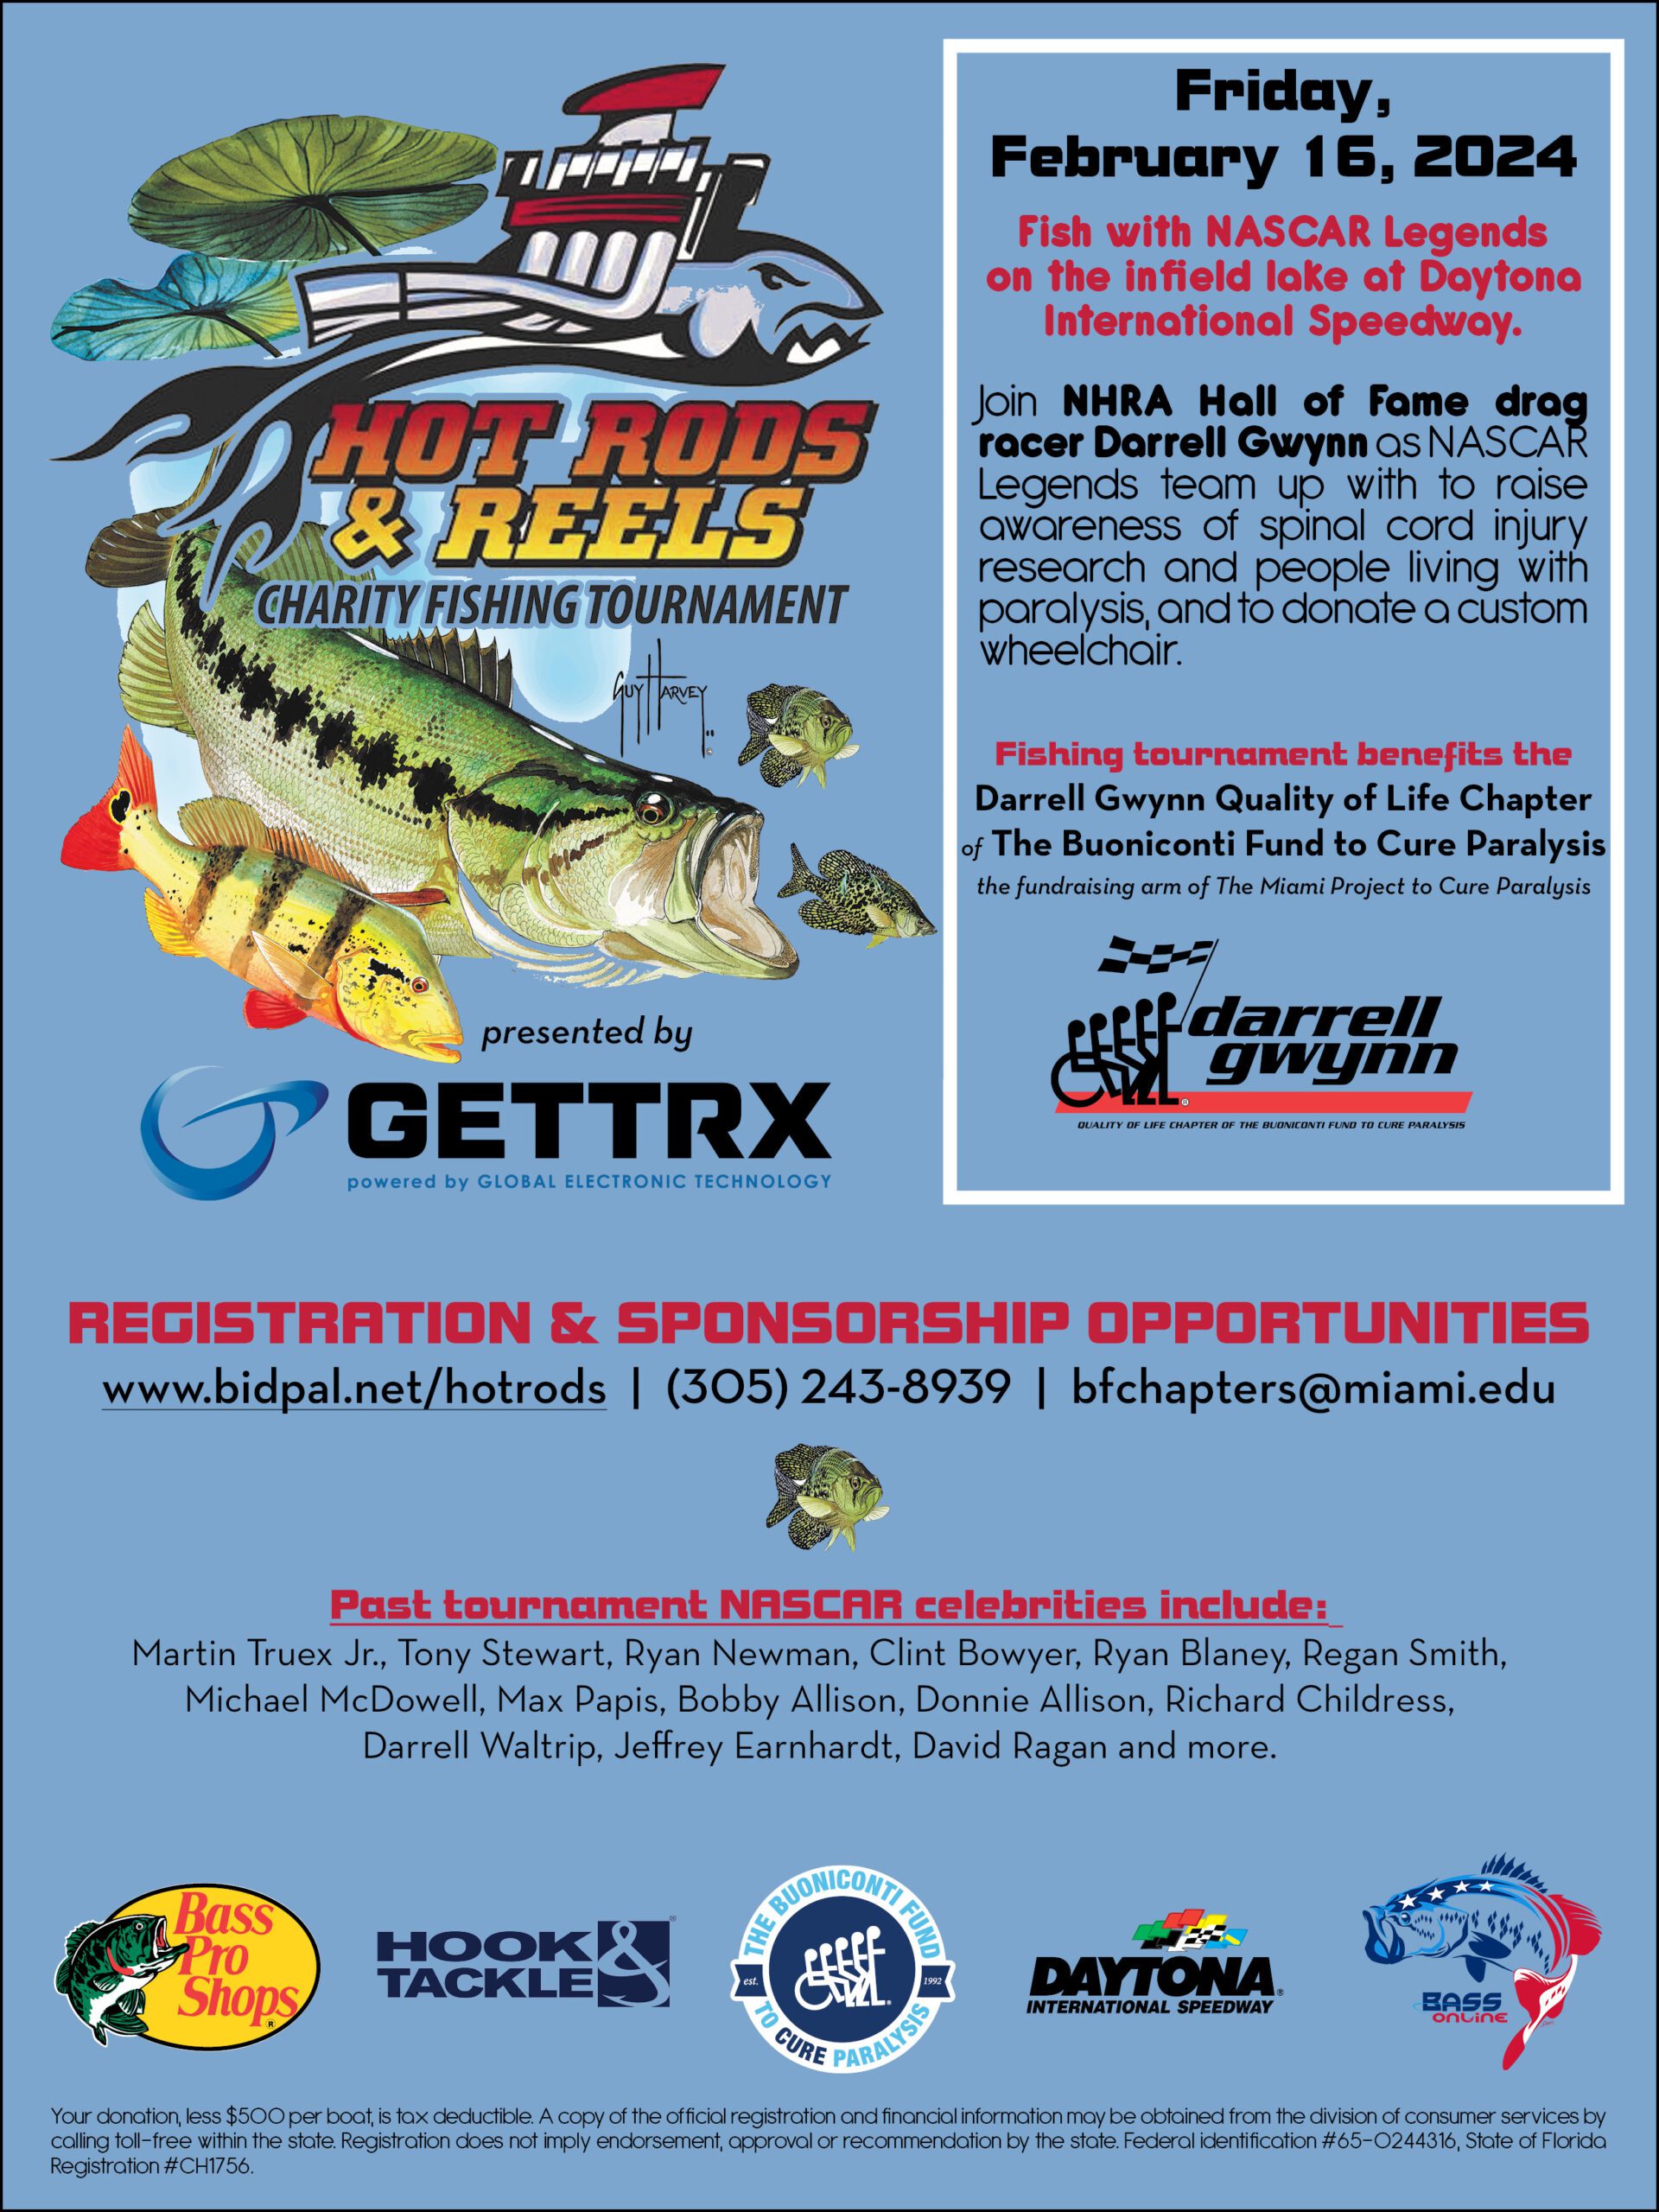 Hot Rods & Reels Charity Fishing Tournament Daytona 2024 - The